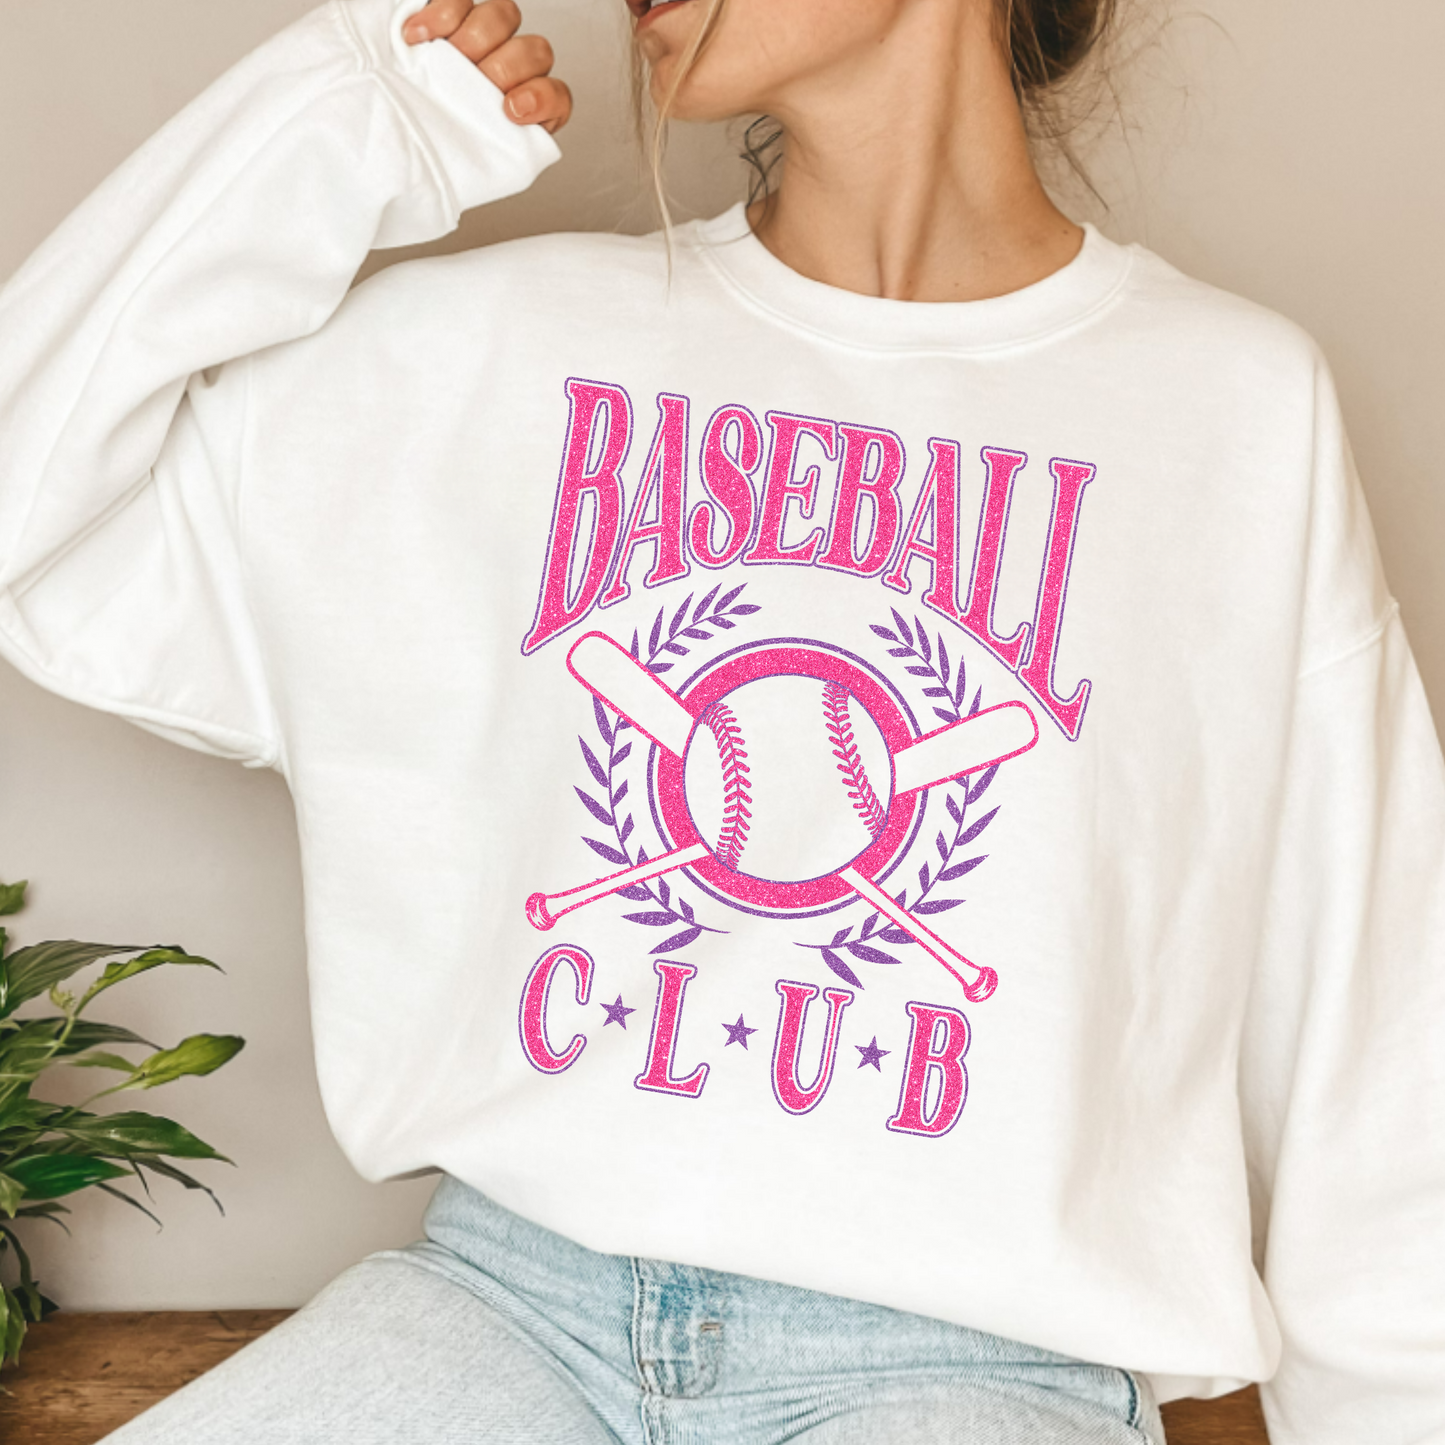 (shirt not included) Baseball Club  - Clear Film Transfer